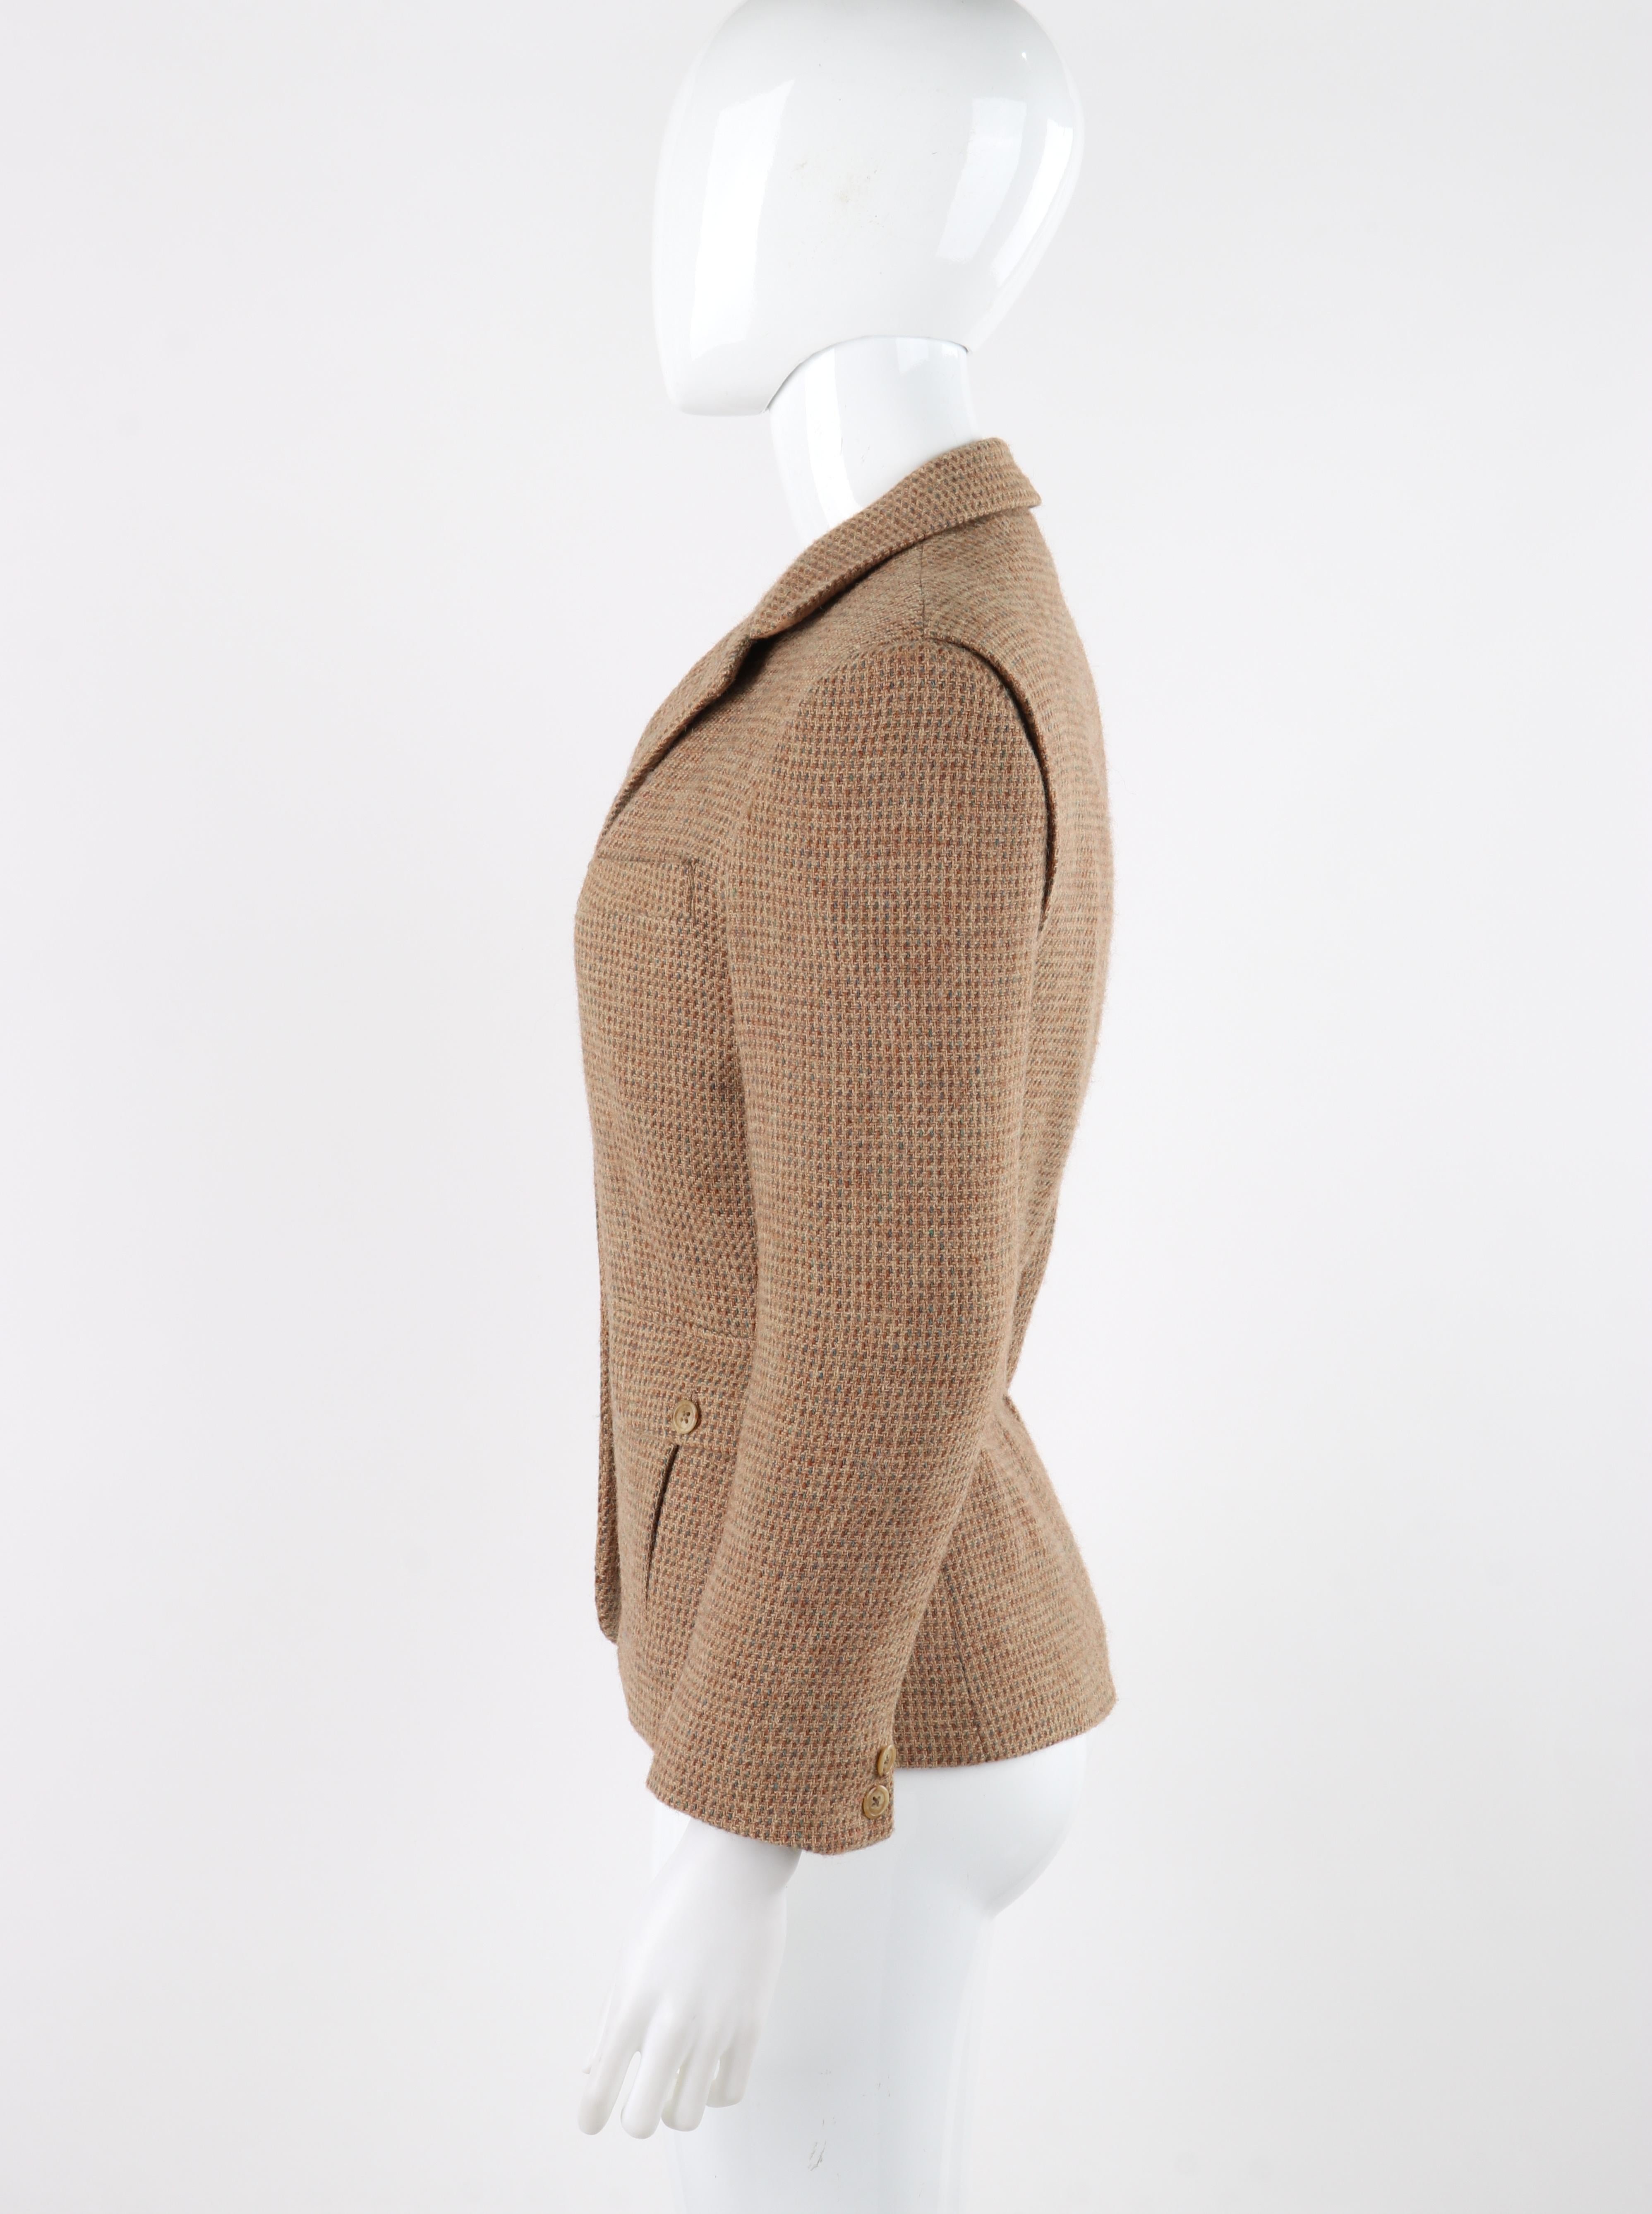 RALPH LAUREN c.1970's Brown Tan Tweed Wool Fitted Button Up Blazer Coat Jacket  For Sale 2